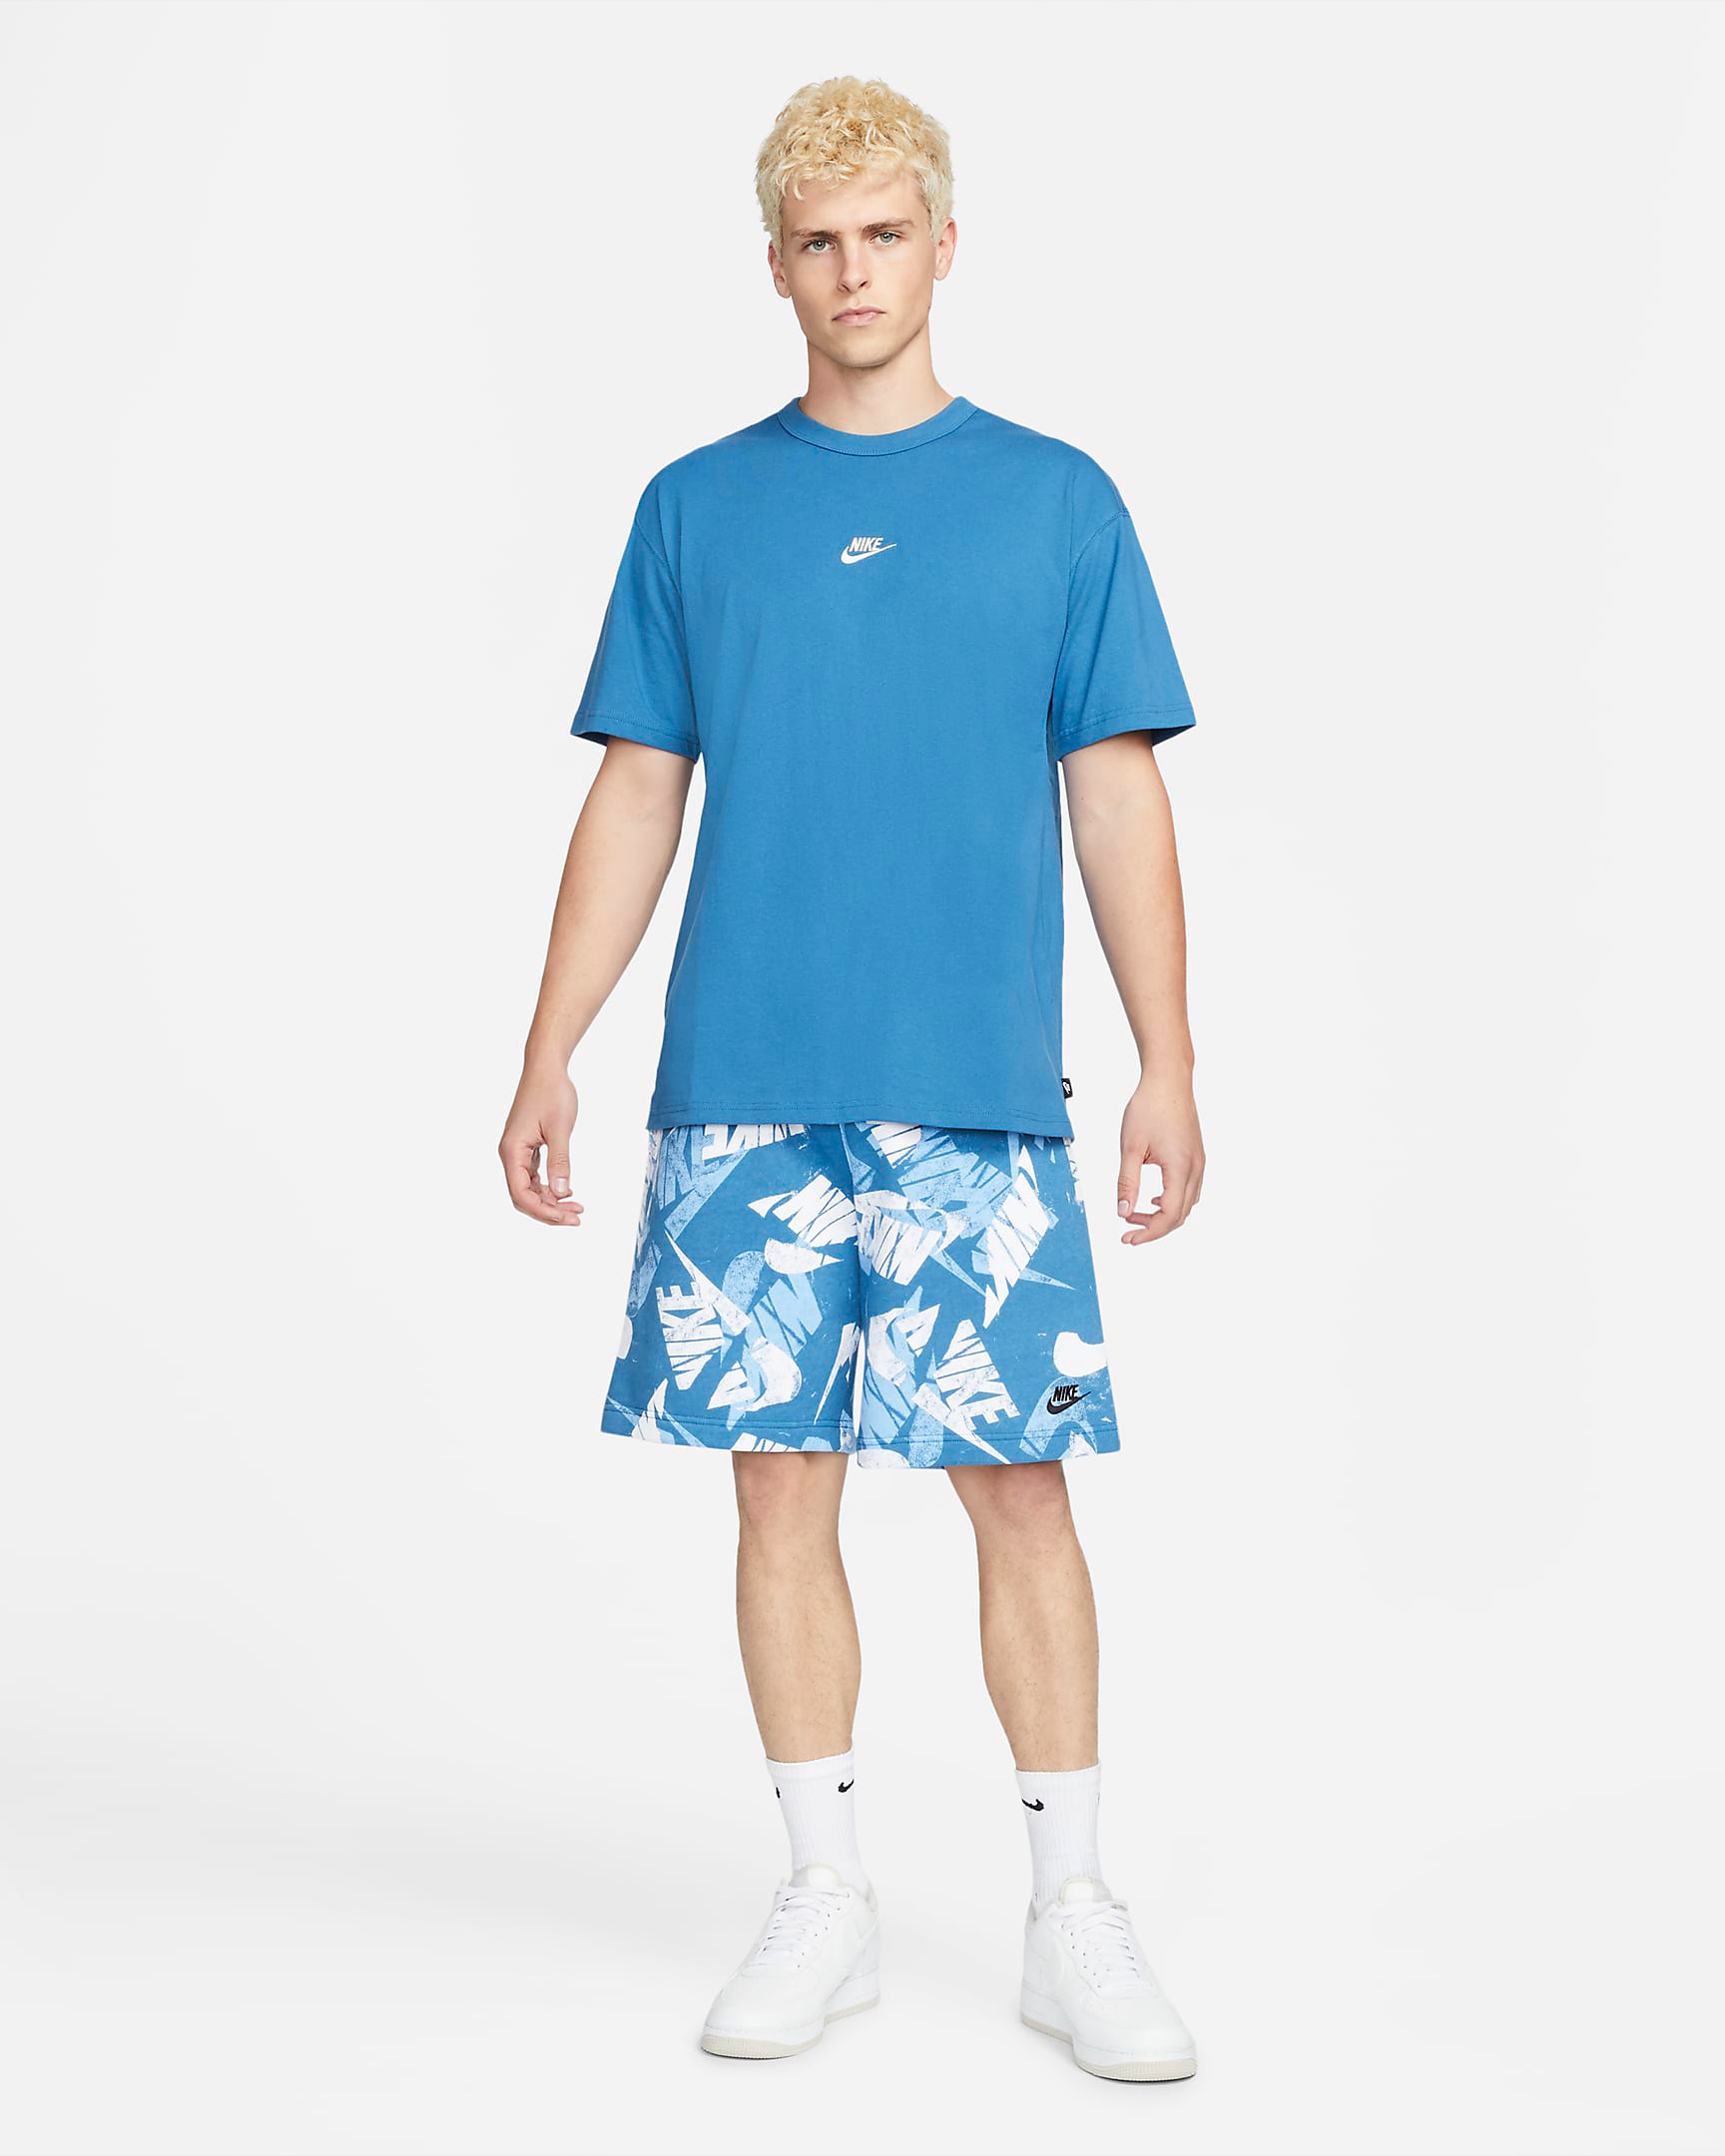 nike-dark-marina-blue-t-shirt-shorts-outfit